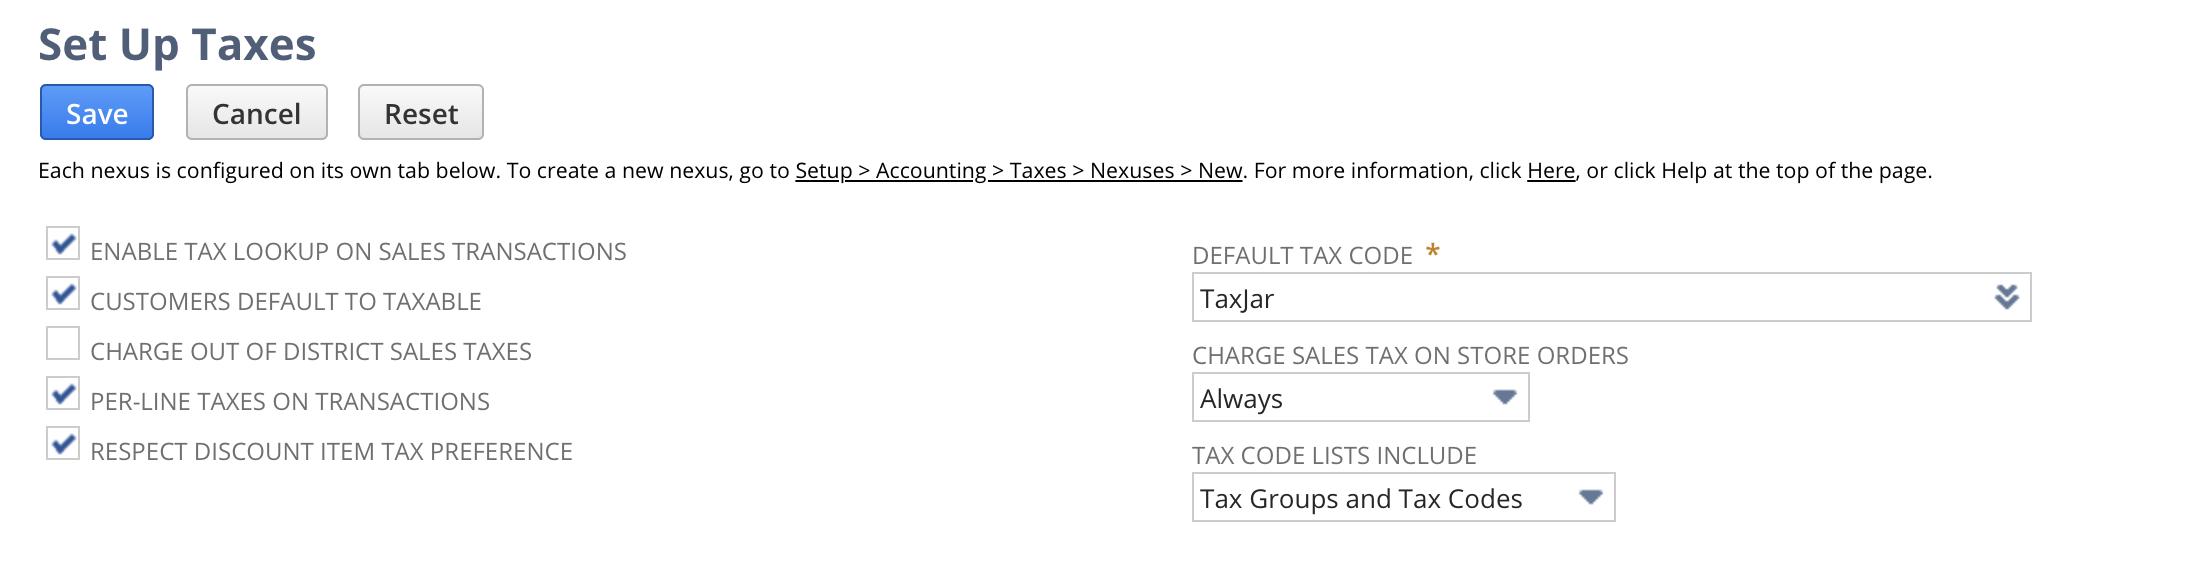 NetSuite Legacy Tax Settings